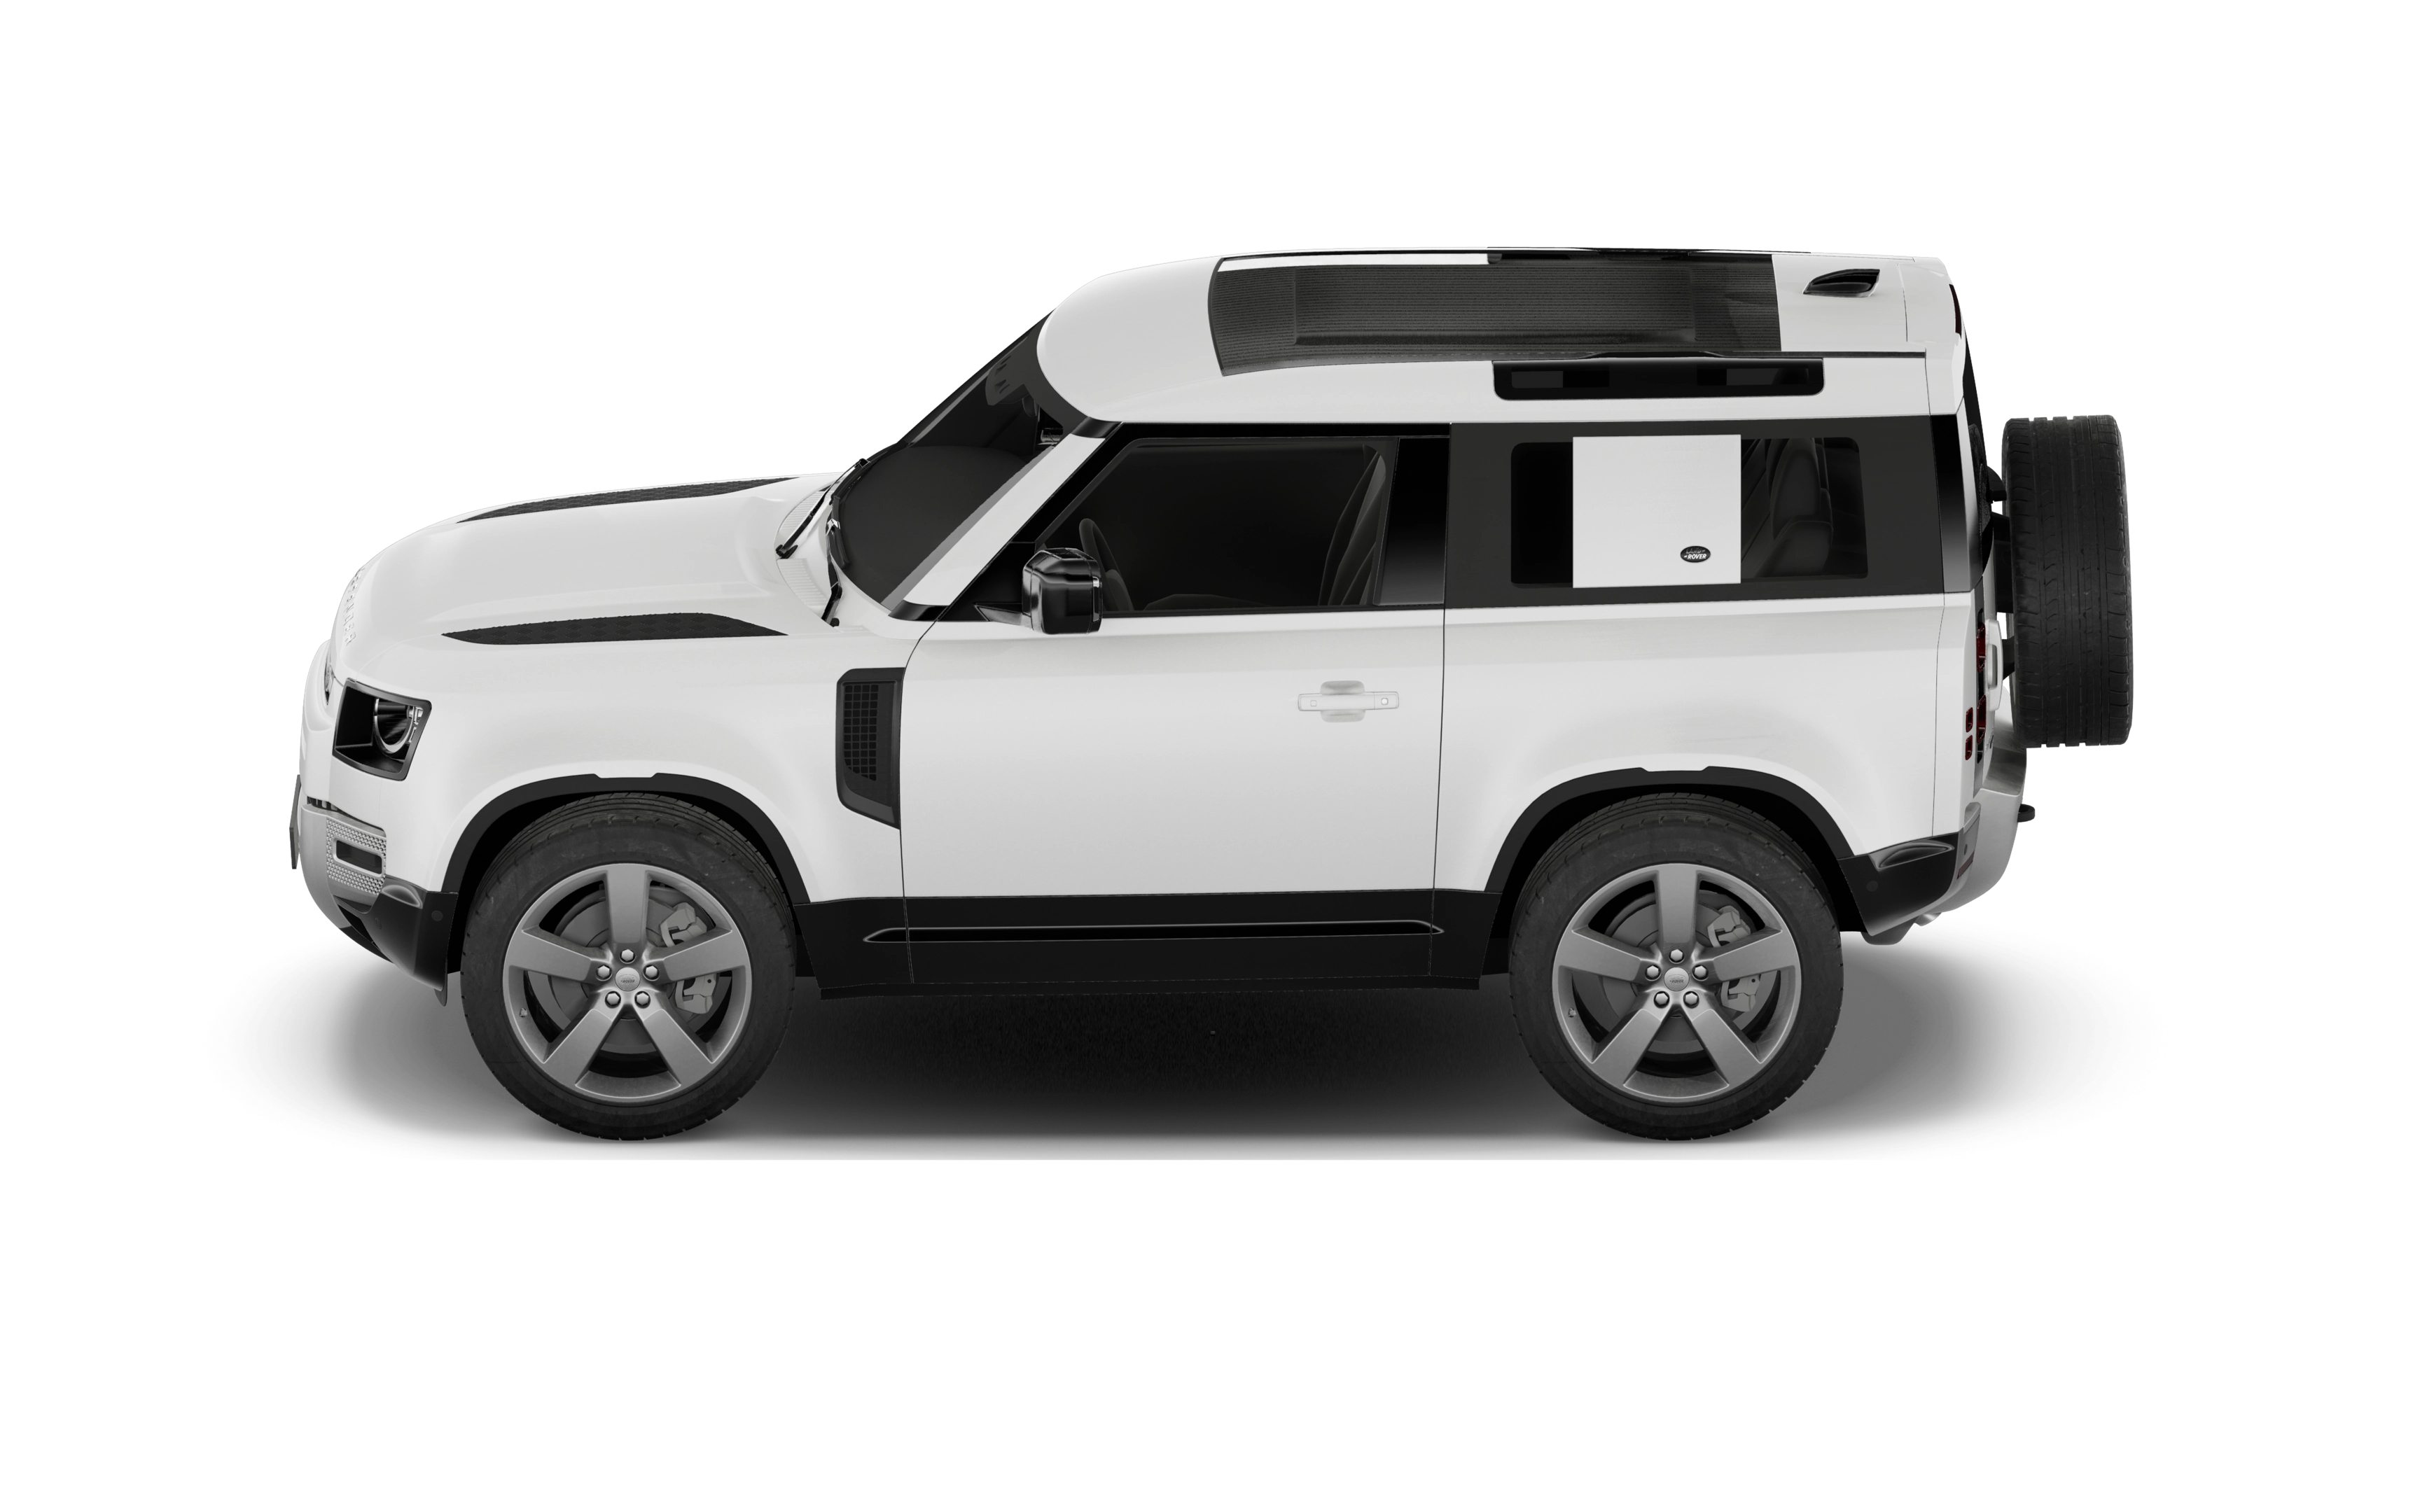 Land rover defender estate 2.0 p400e x-dynamic s 110 5 doors auto [6 seat]